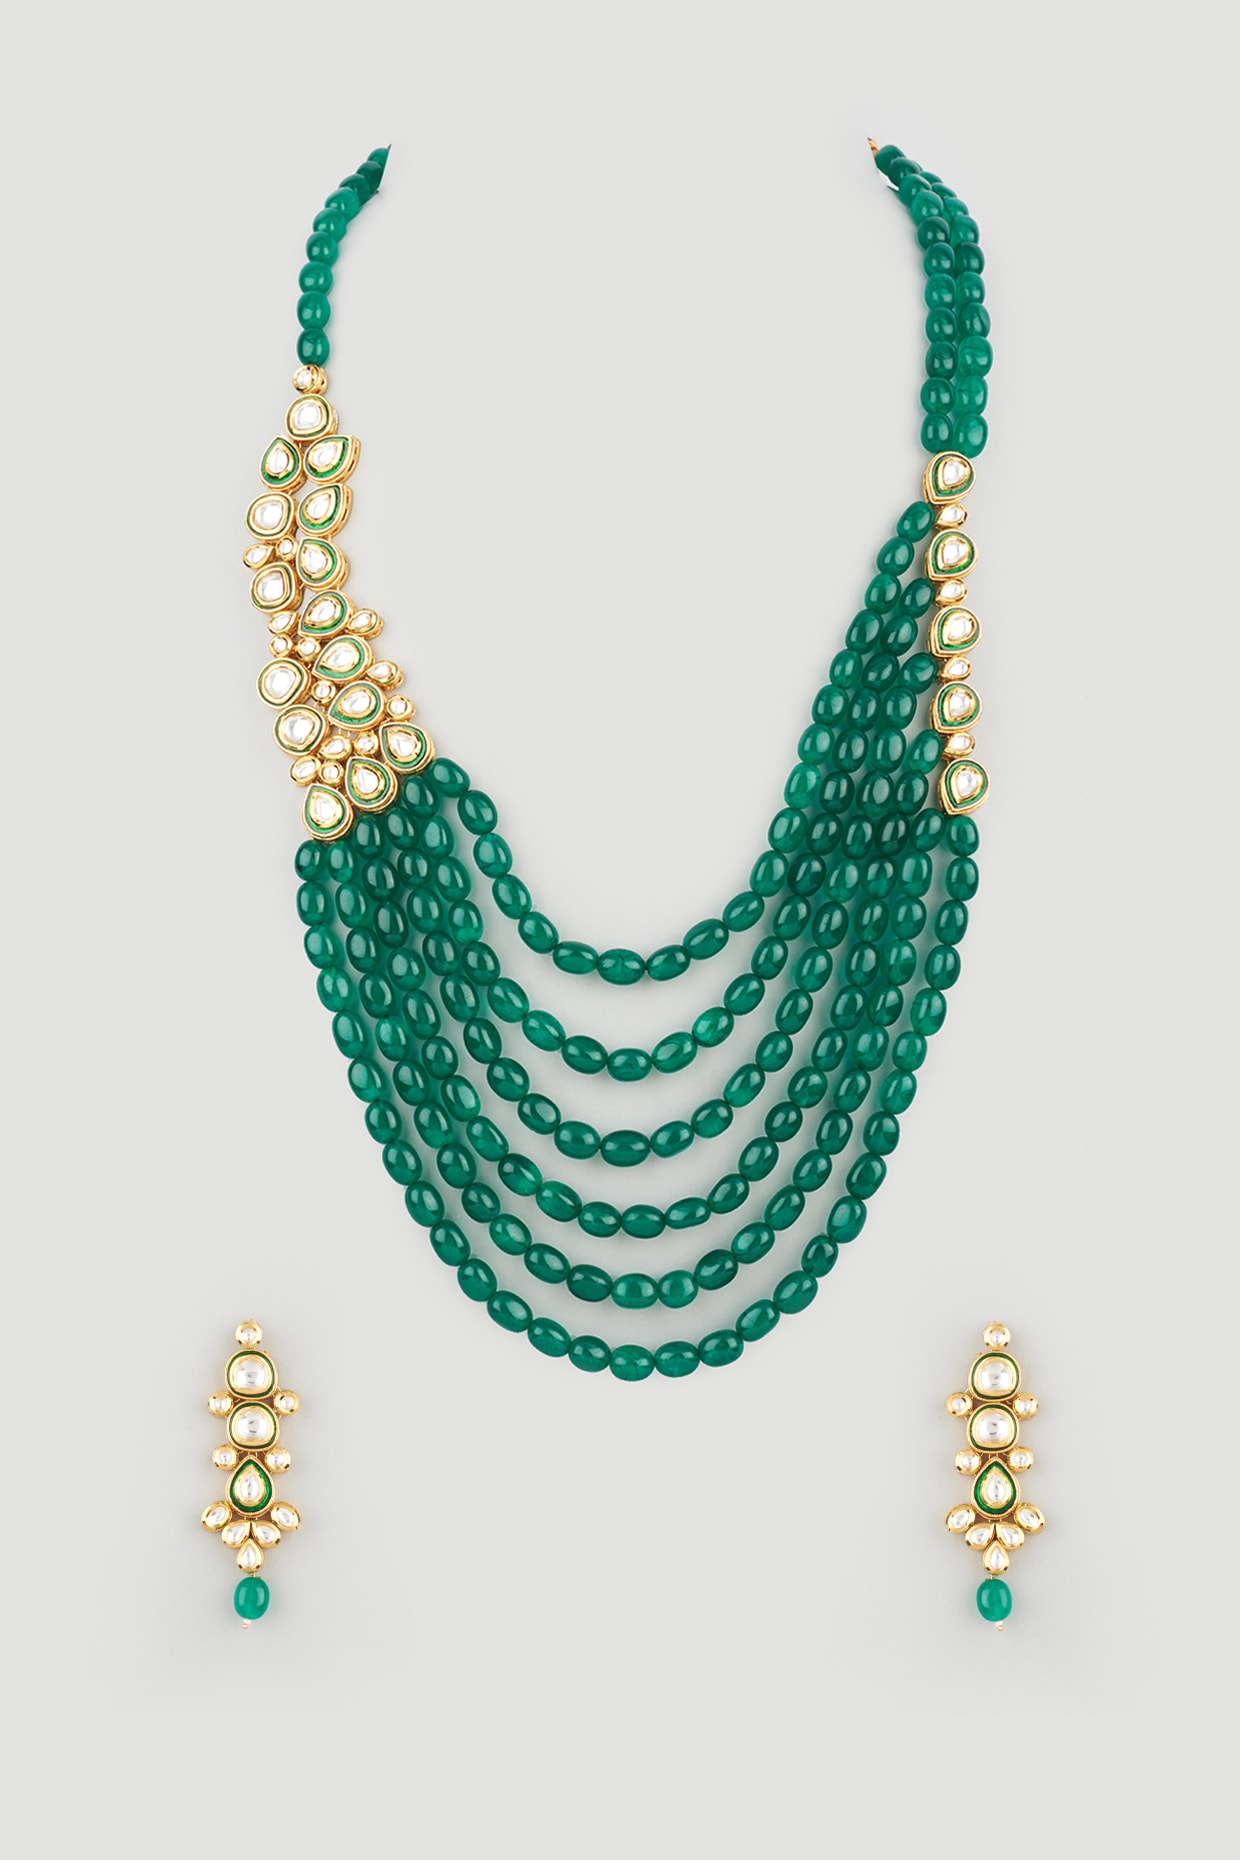 Statement green gemstone handmade necklace set at ₹4950 | Azilaa